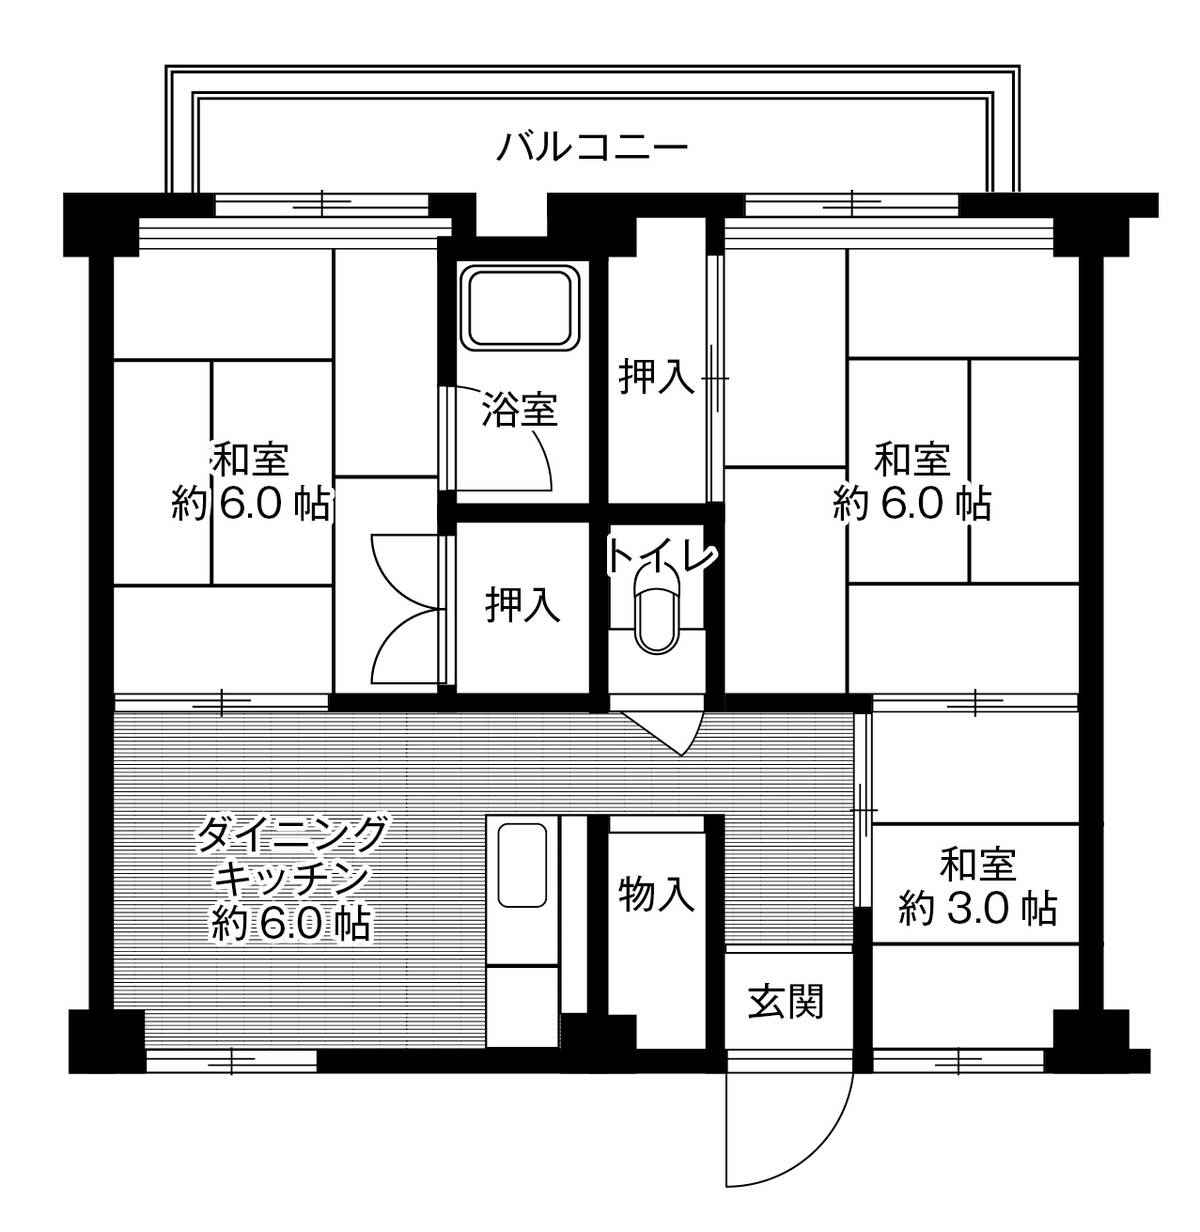 3DK floorplan of Village House Suzurandai in Kita-ku